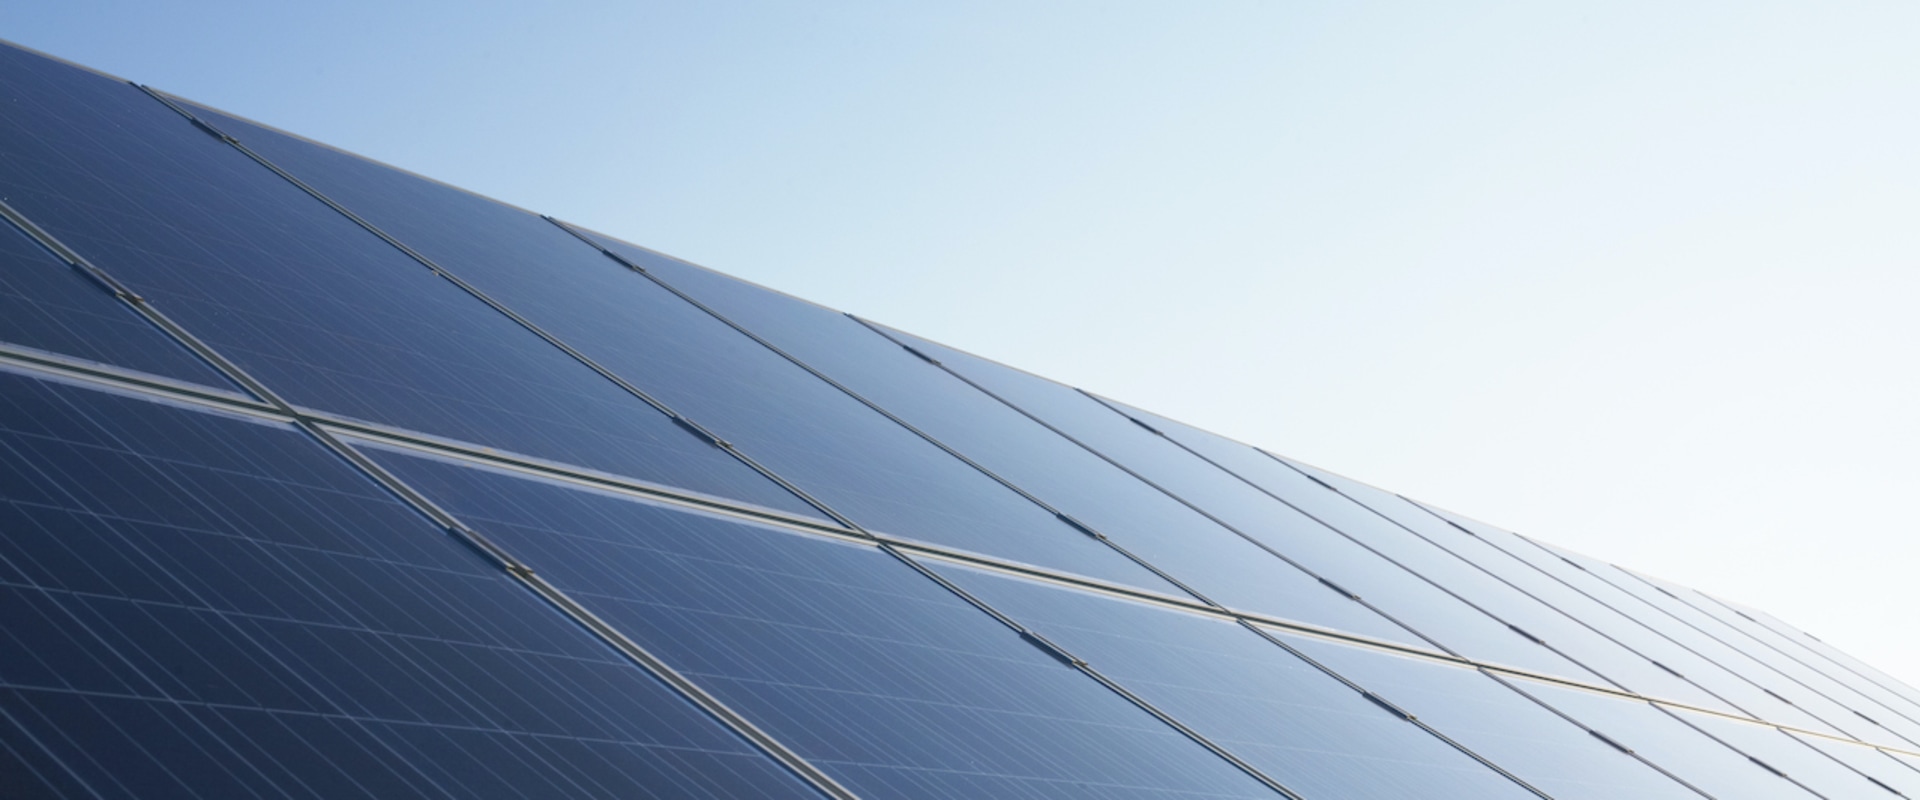 How do solar panels really work?